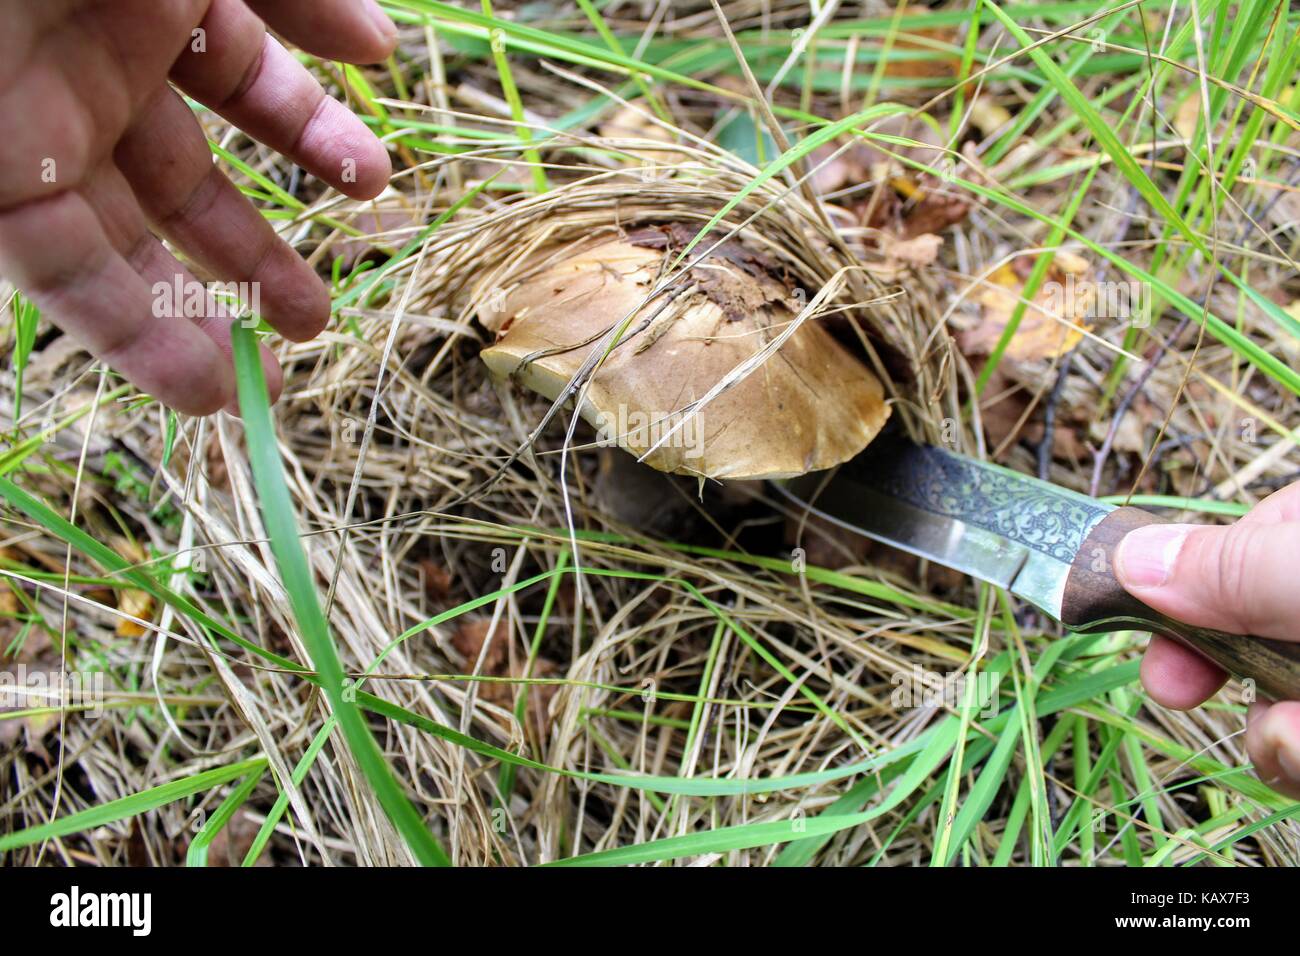 The hand of the mushroom picker cuts the mushroom (birch bolete) with a knife. Stock Photo